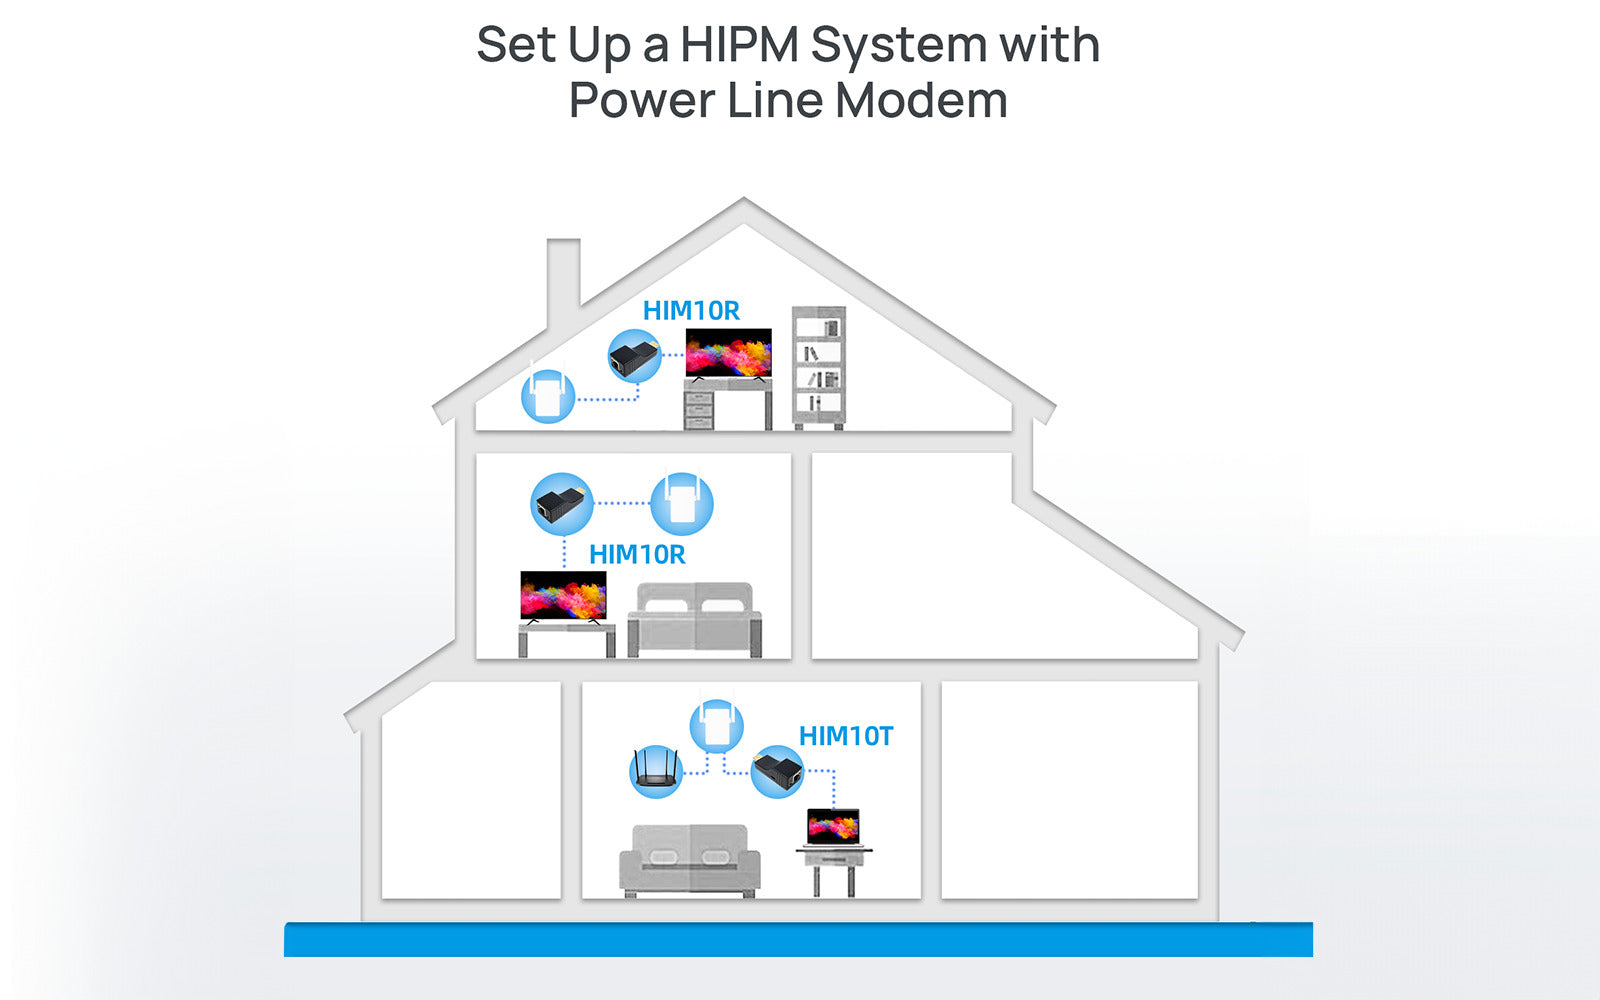 HIPM system with power line modem